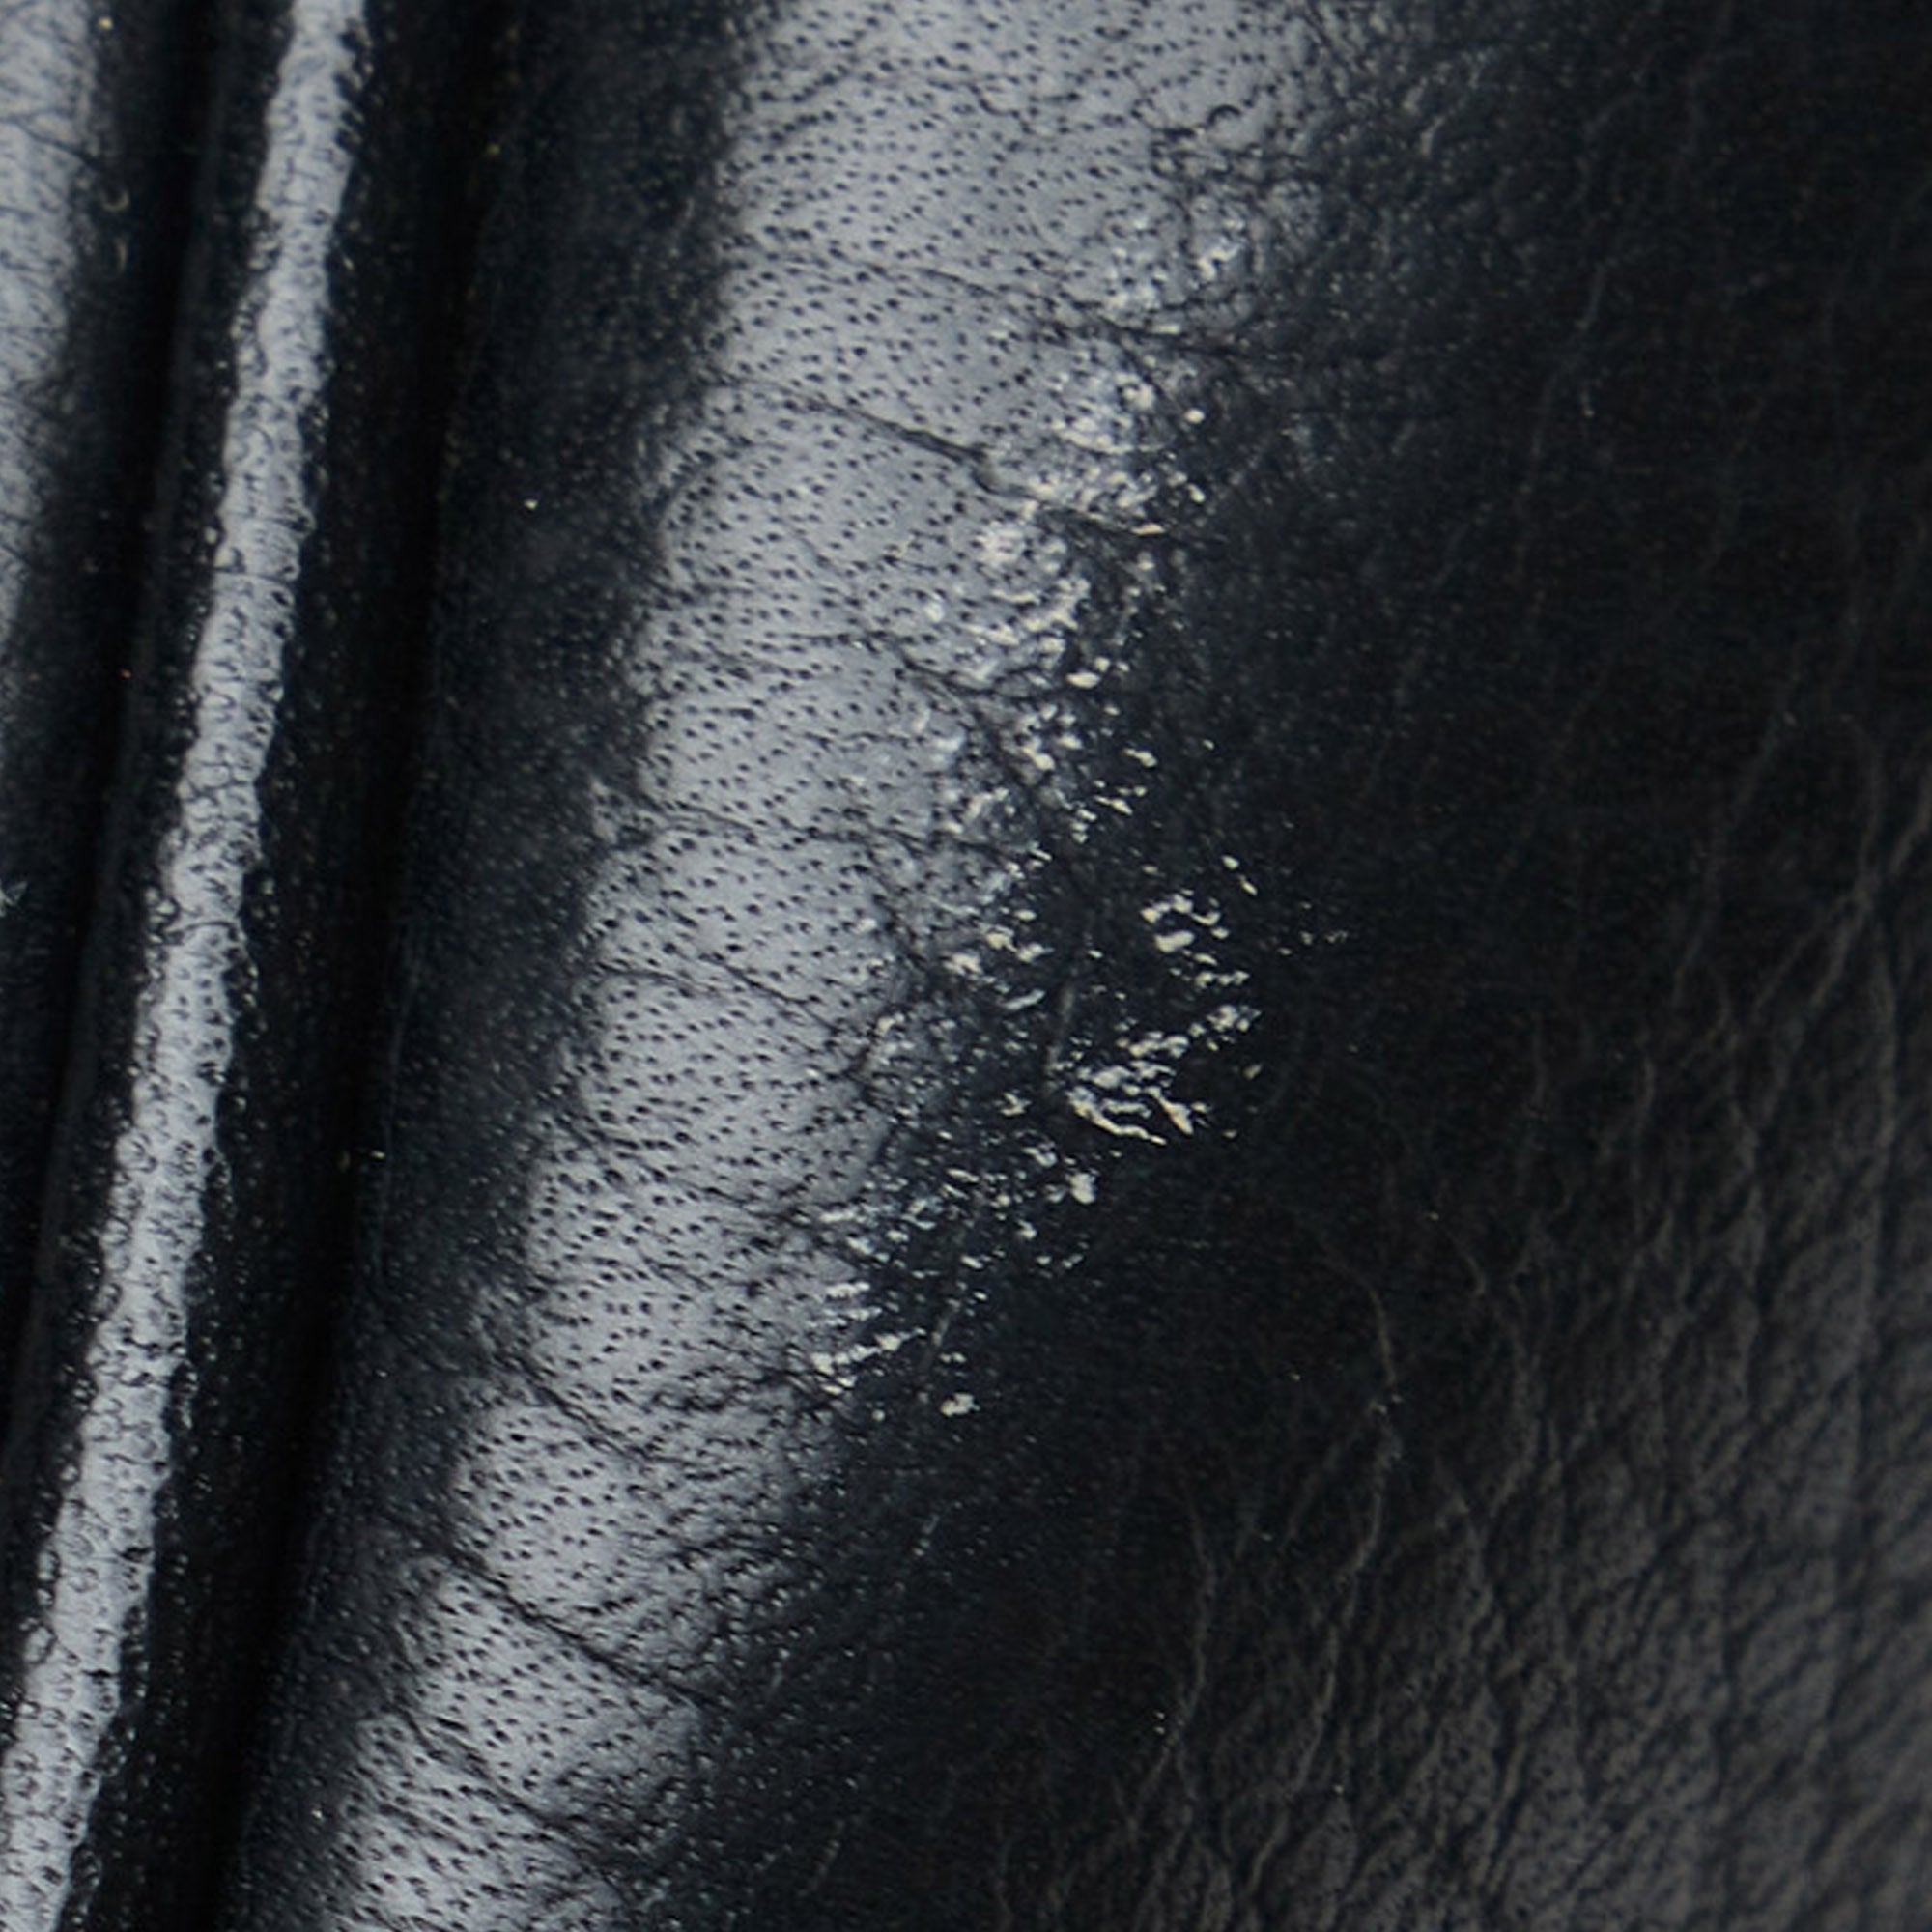 Green Burberry Leather Crossbody Bag – Designer Revival